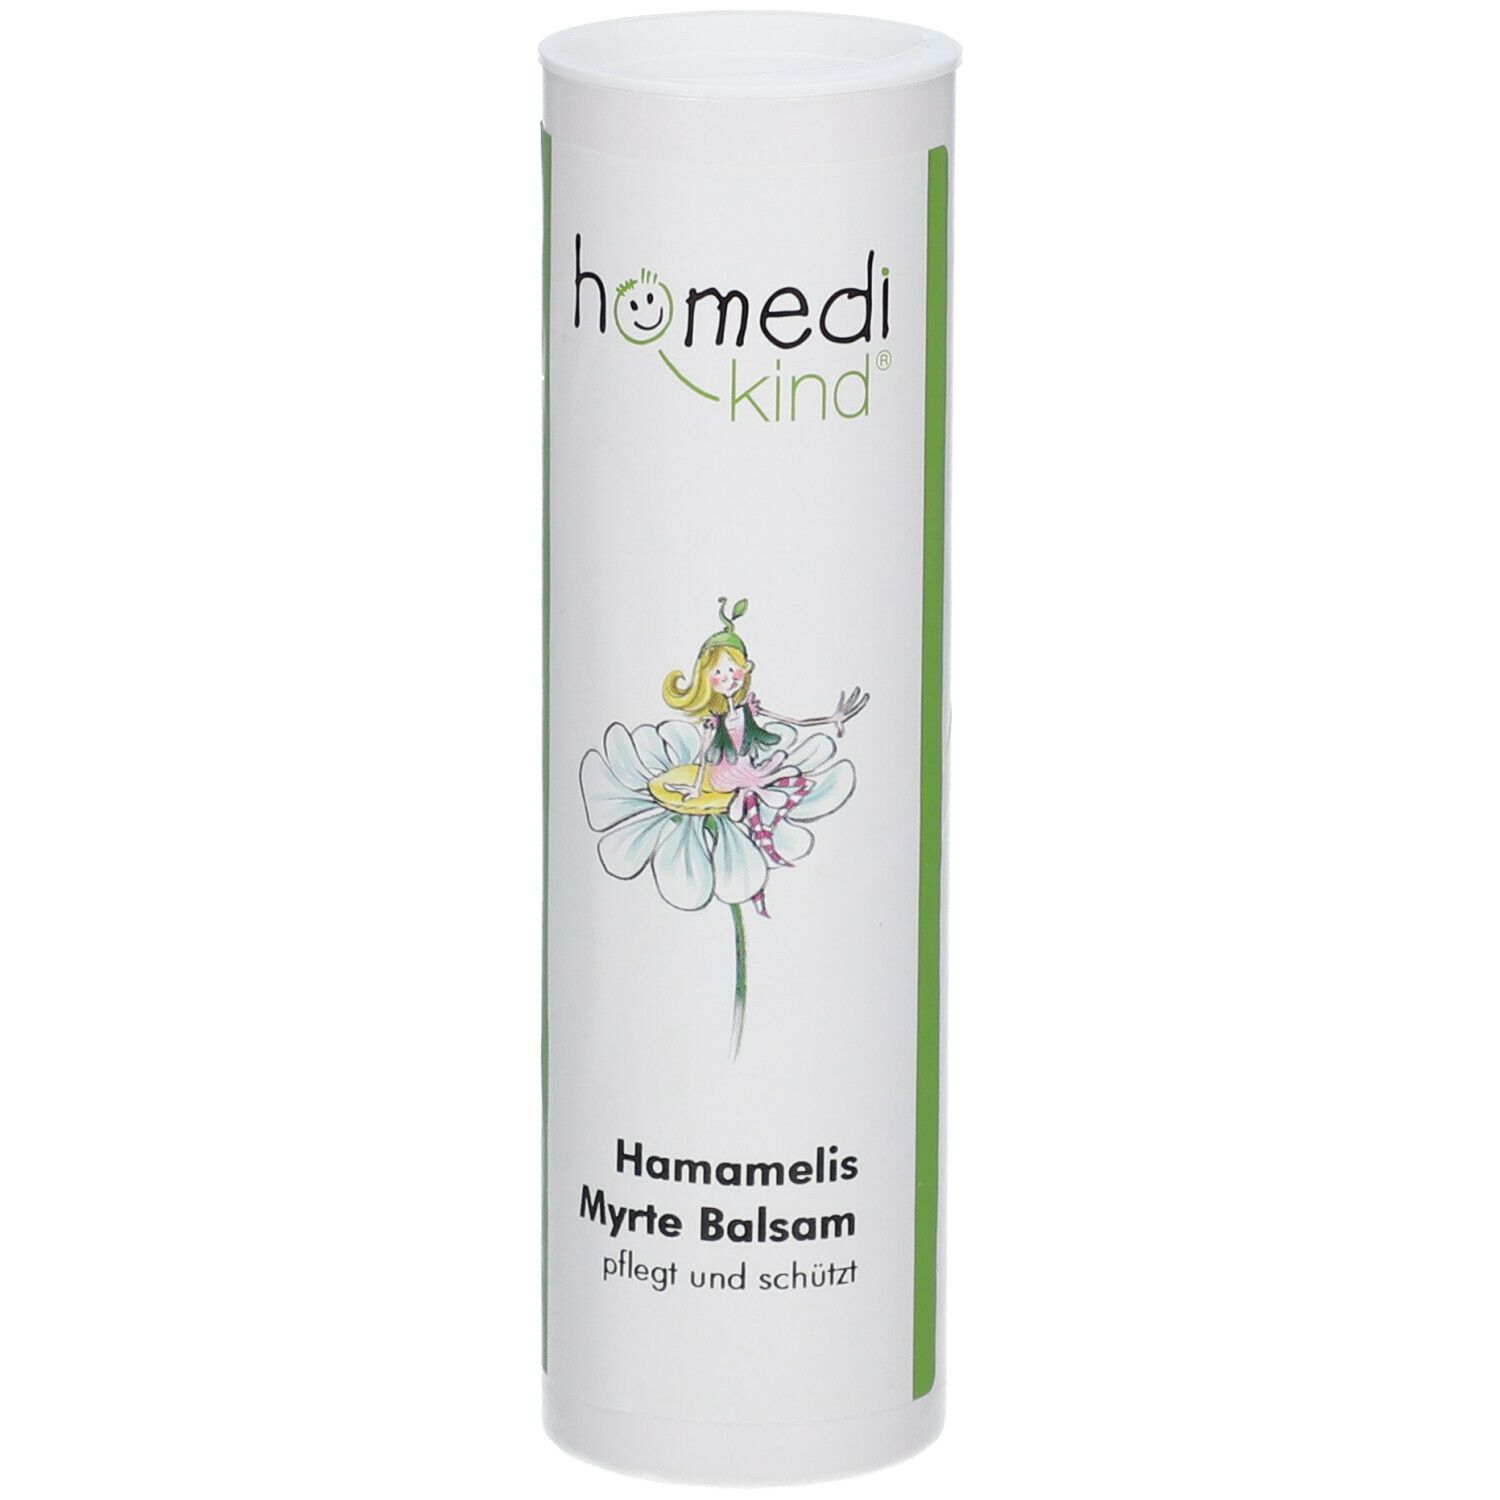 homedi-kind® Hamamelis-Myrte Balsam